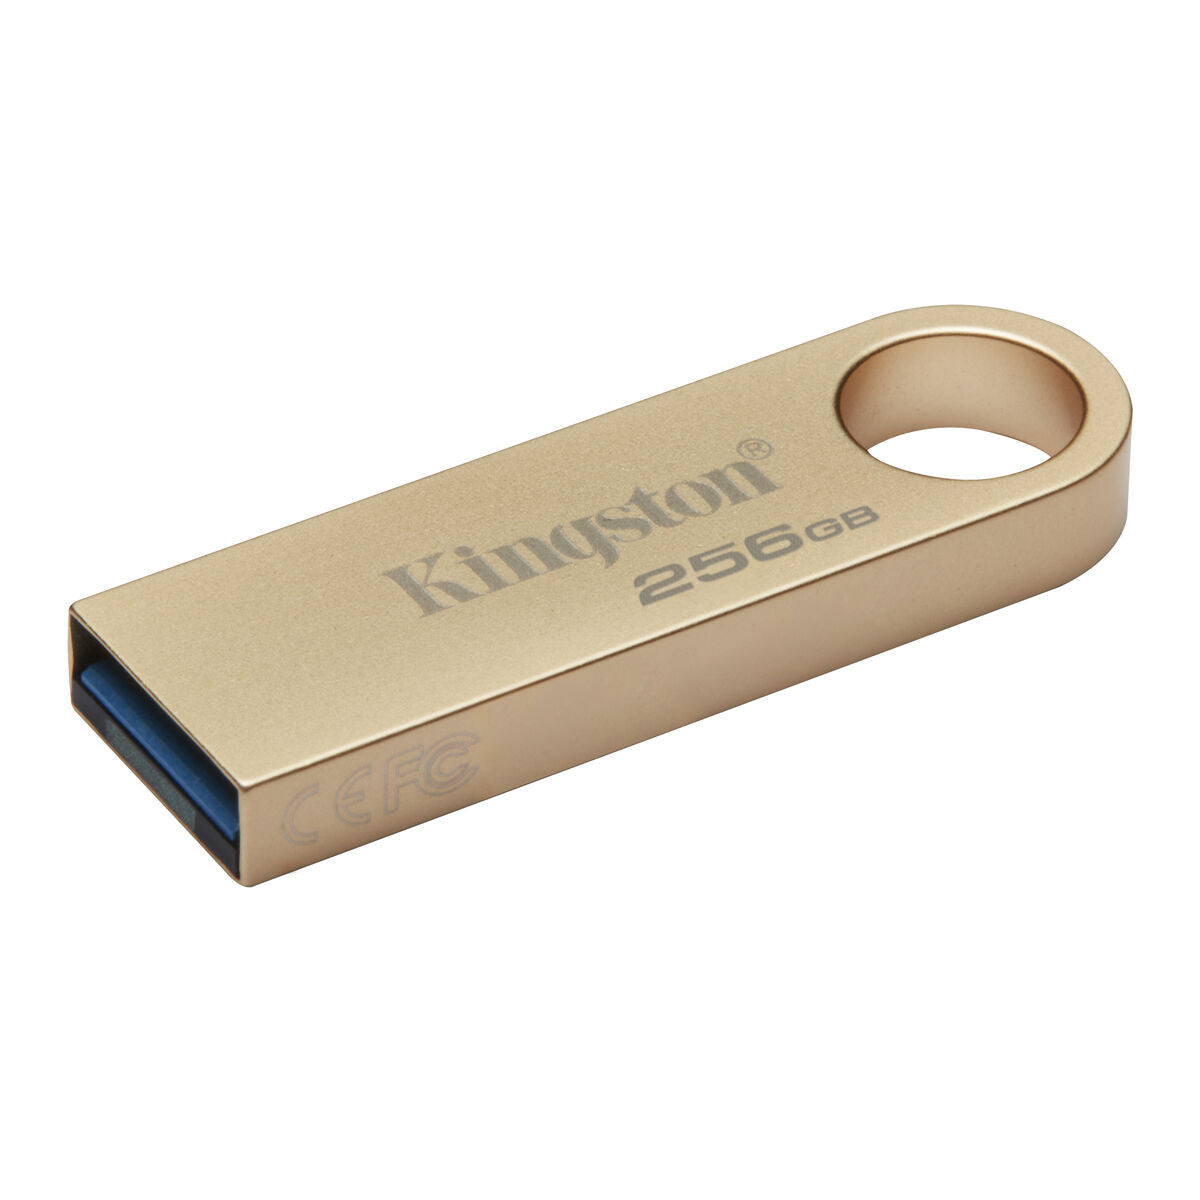 Clé USB Kingston DTSE9G3/256GB Doré 256 GB